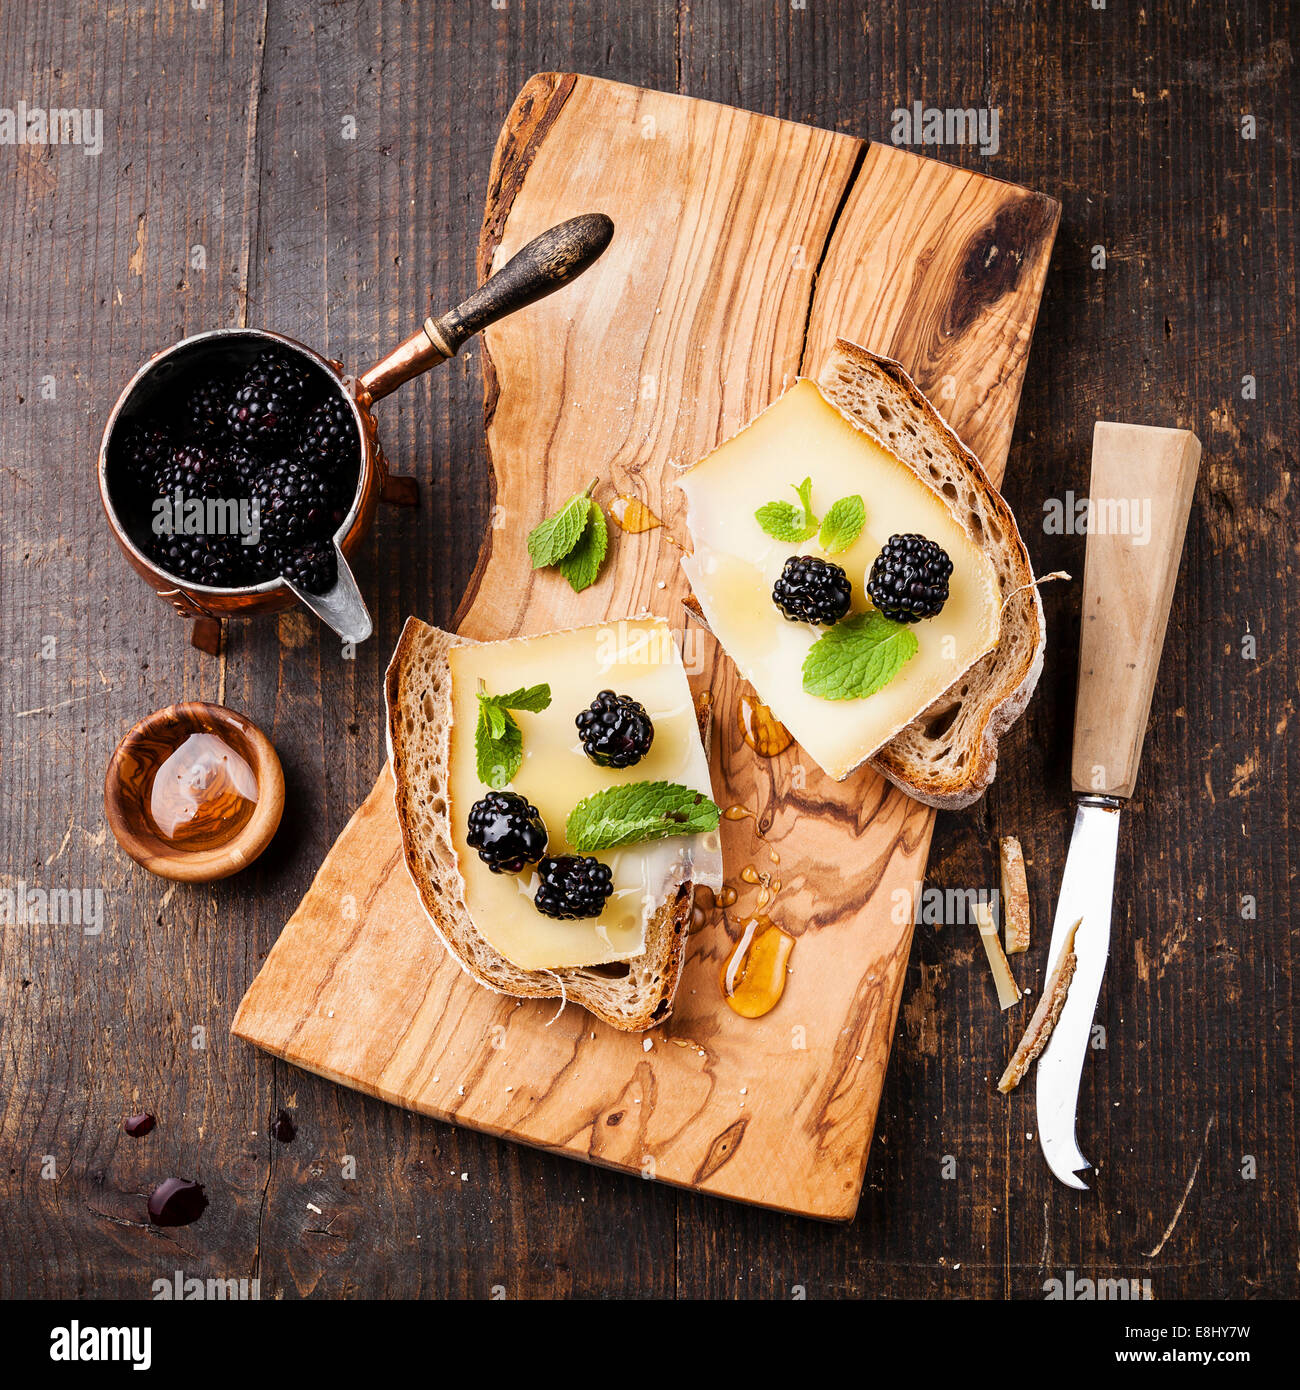 La Bruschetta italiana sandwich con queso y blackberry en pan fresco sobre fondo de madera oscura. Foto de stock